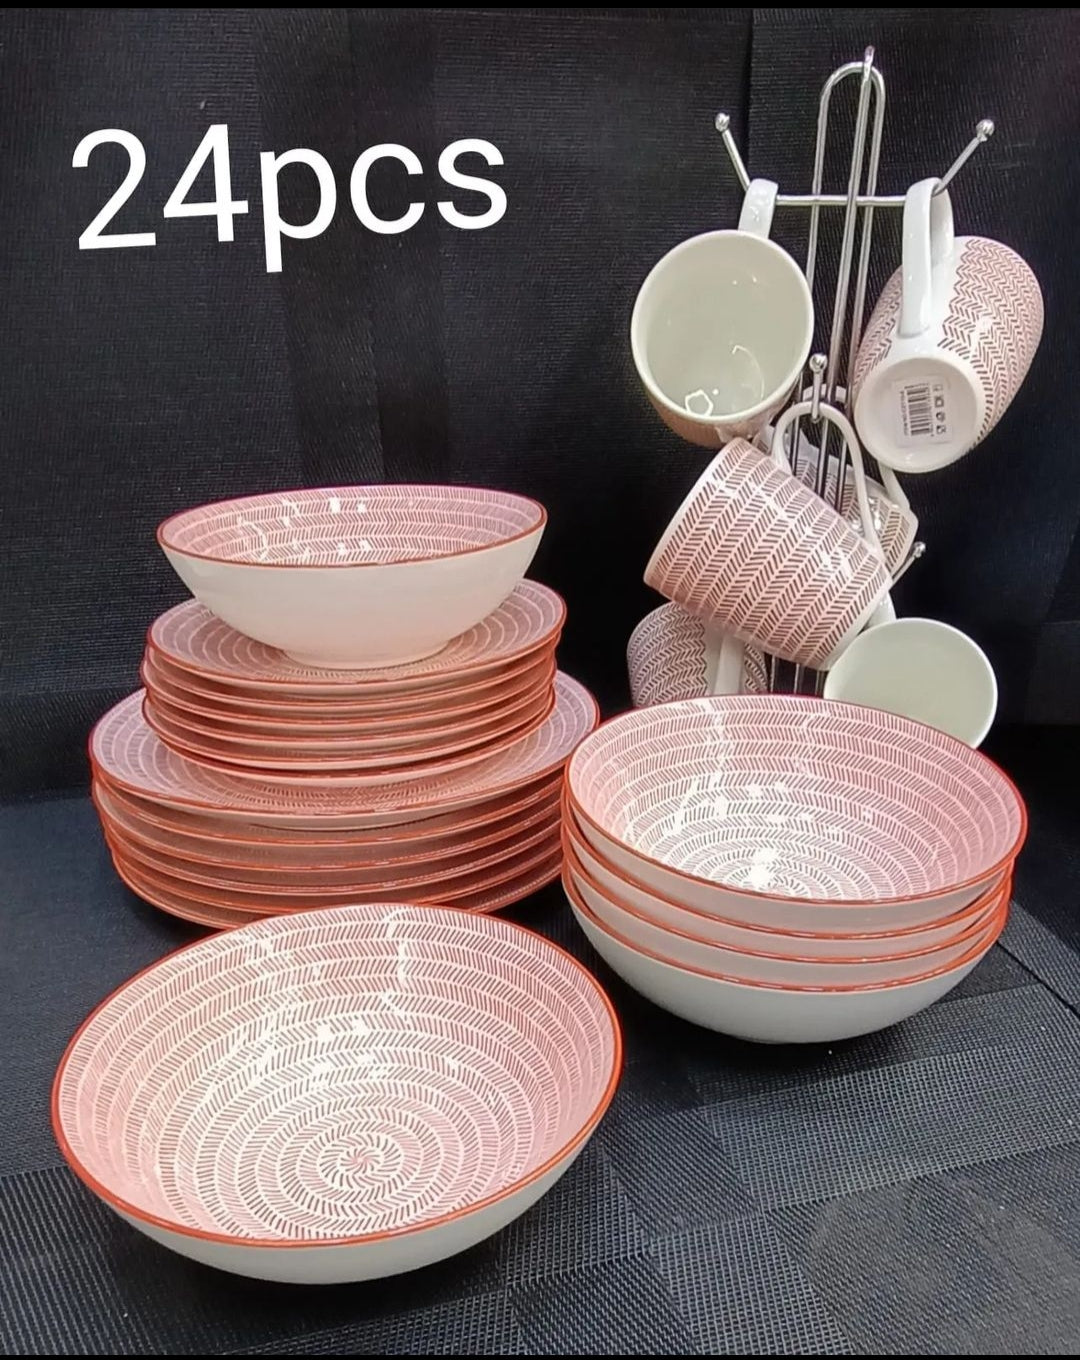 24pcs Ceramic Dinner Sets